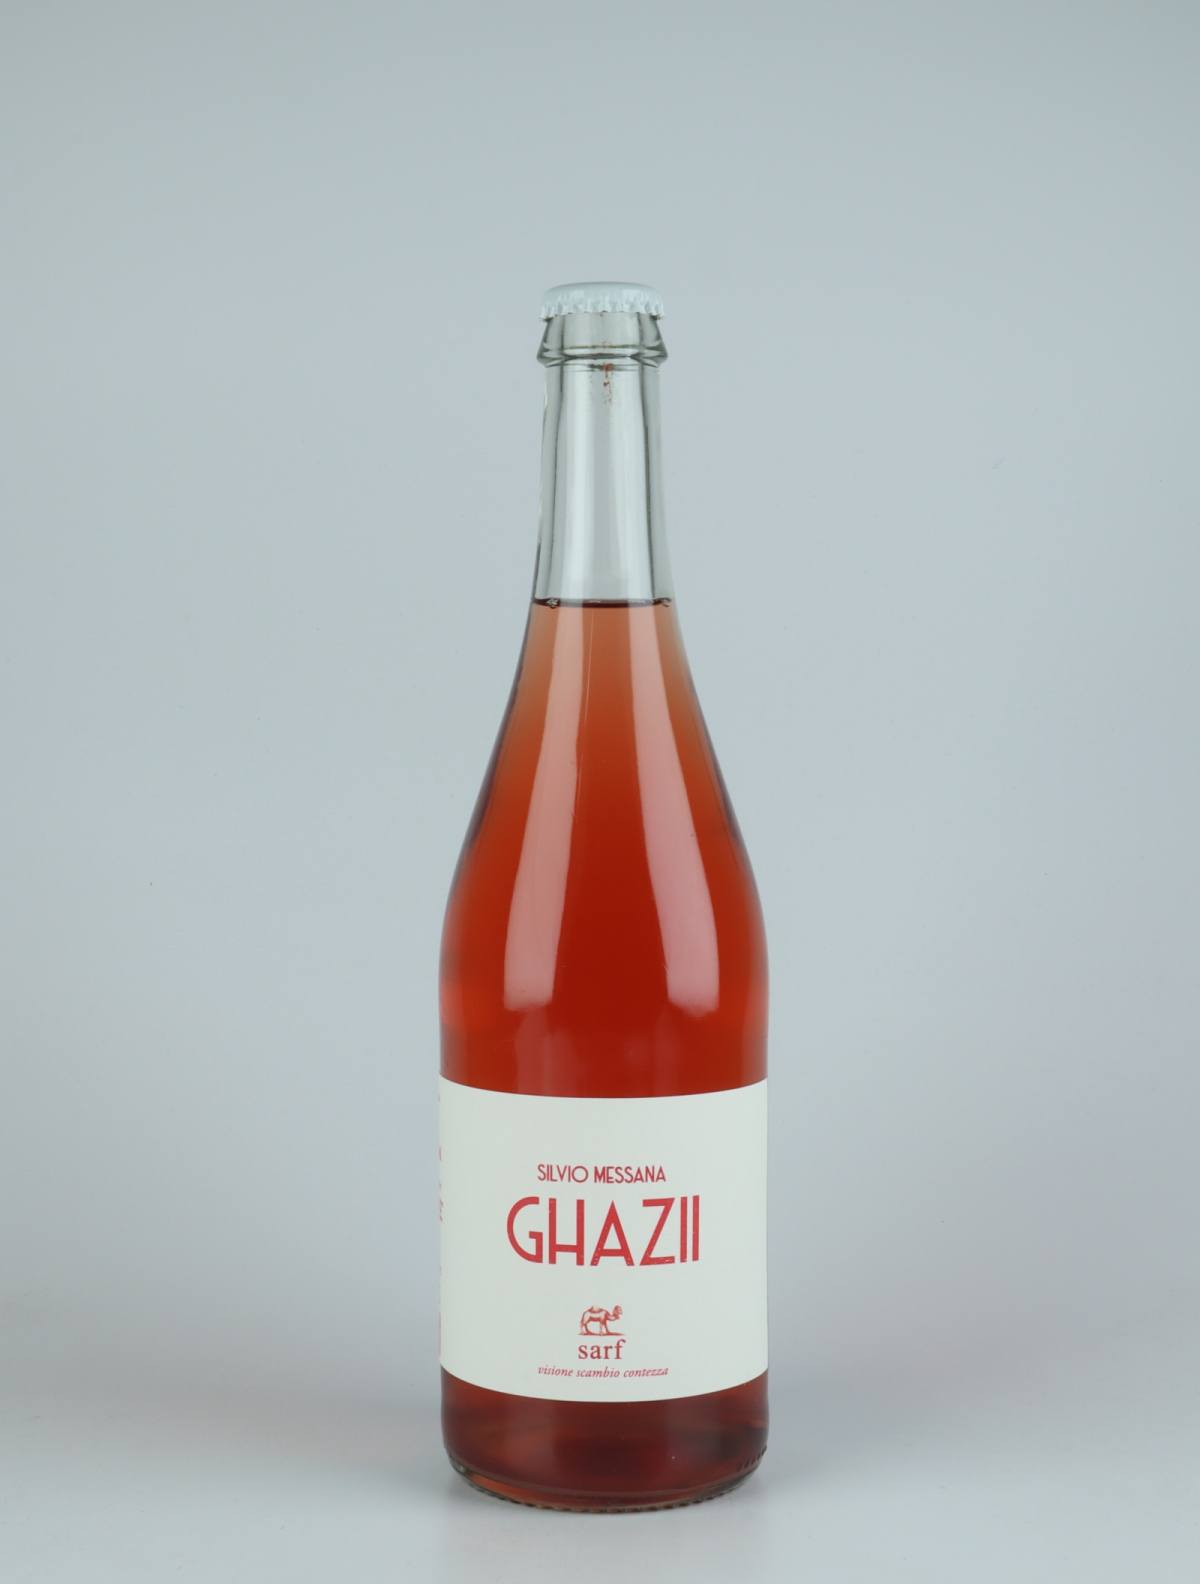 En flaske 2021 Ghazii Mousserende fra Silvio Messana, Toscana i Italien